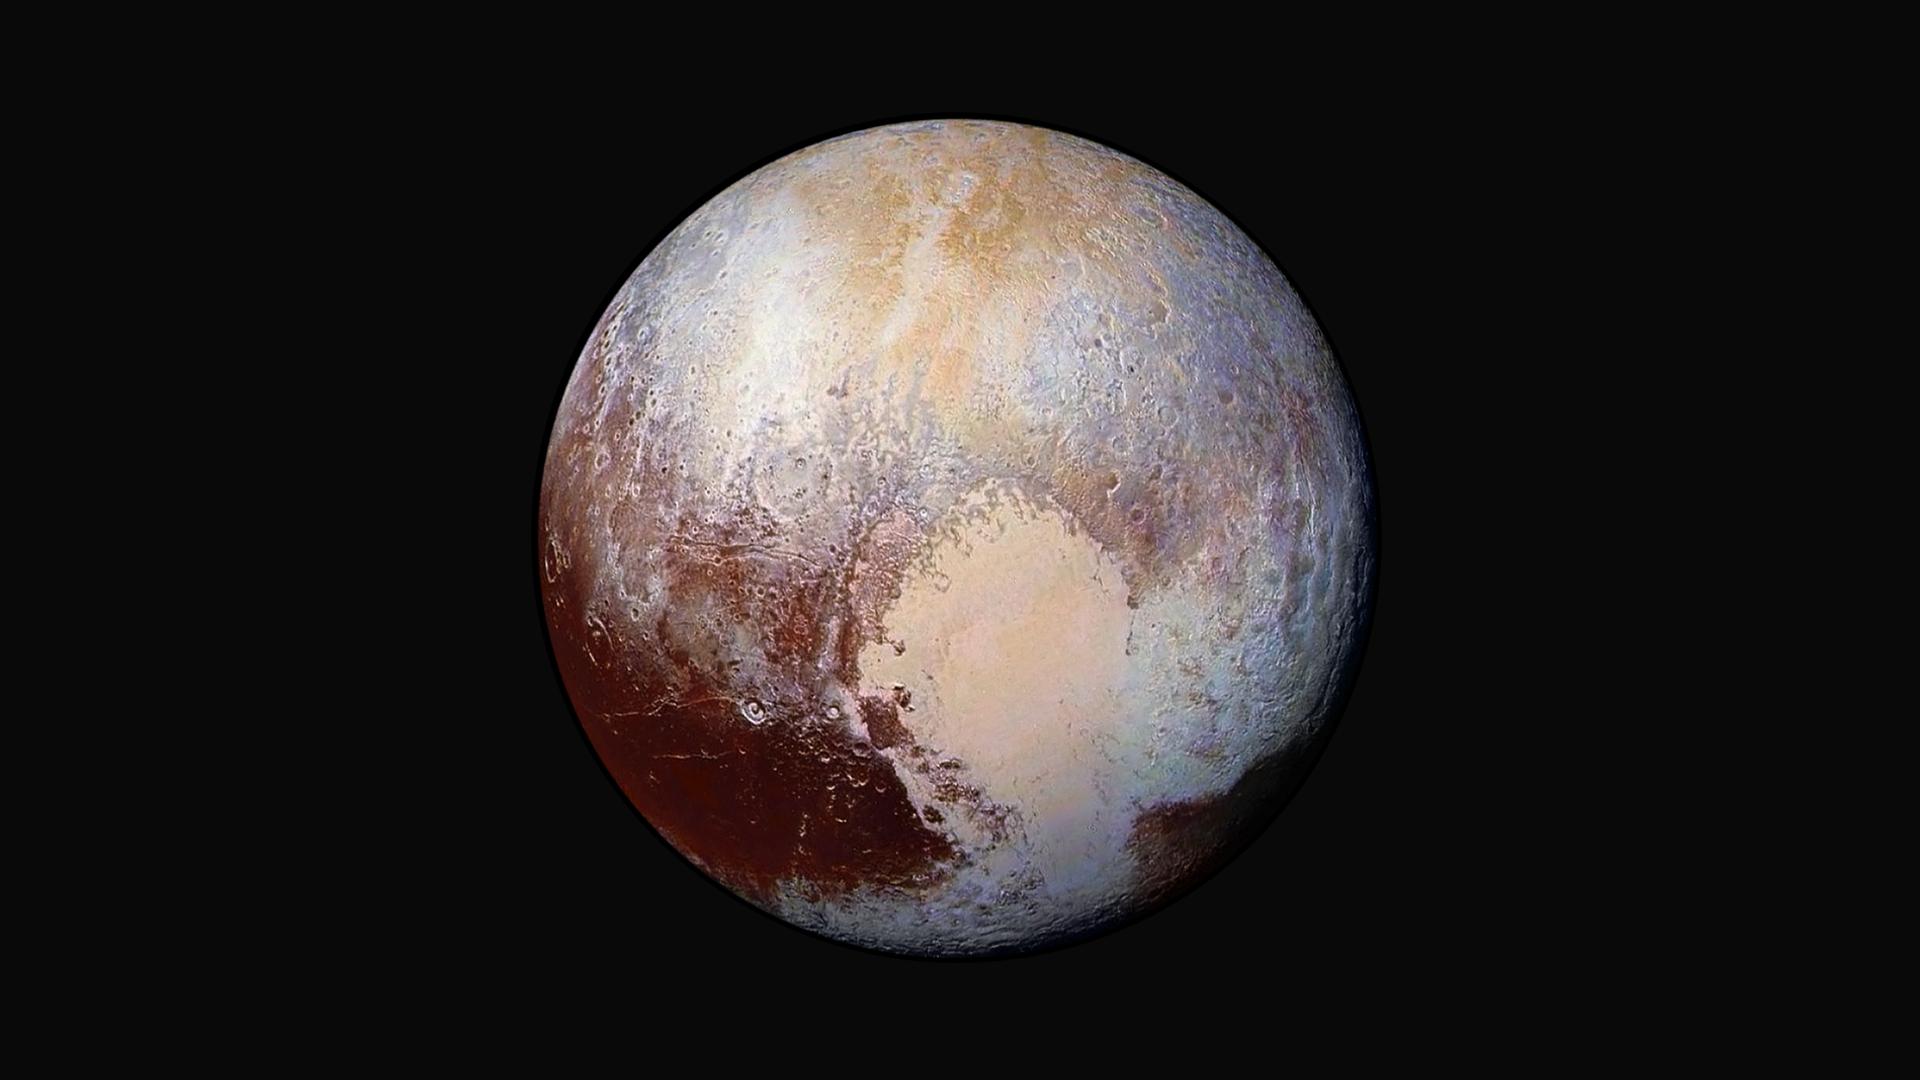 Pluto picture in 2018